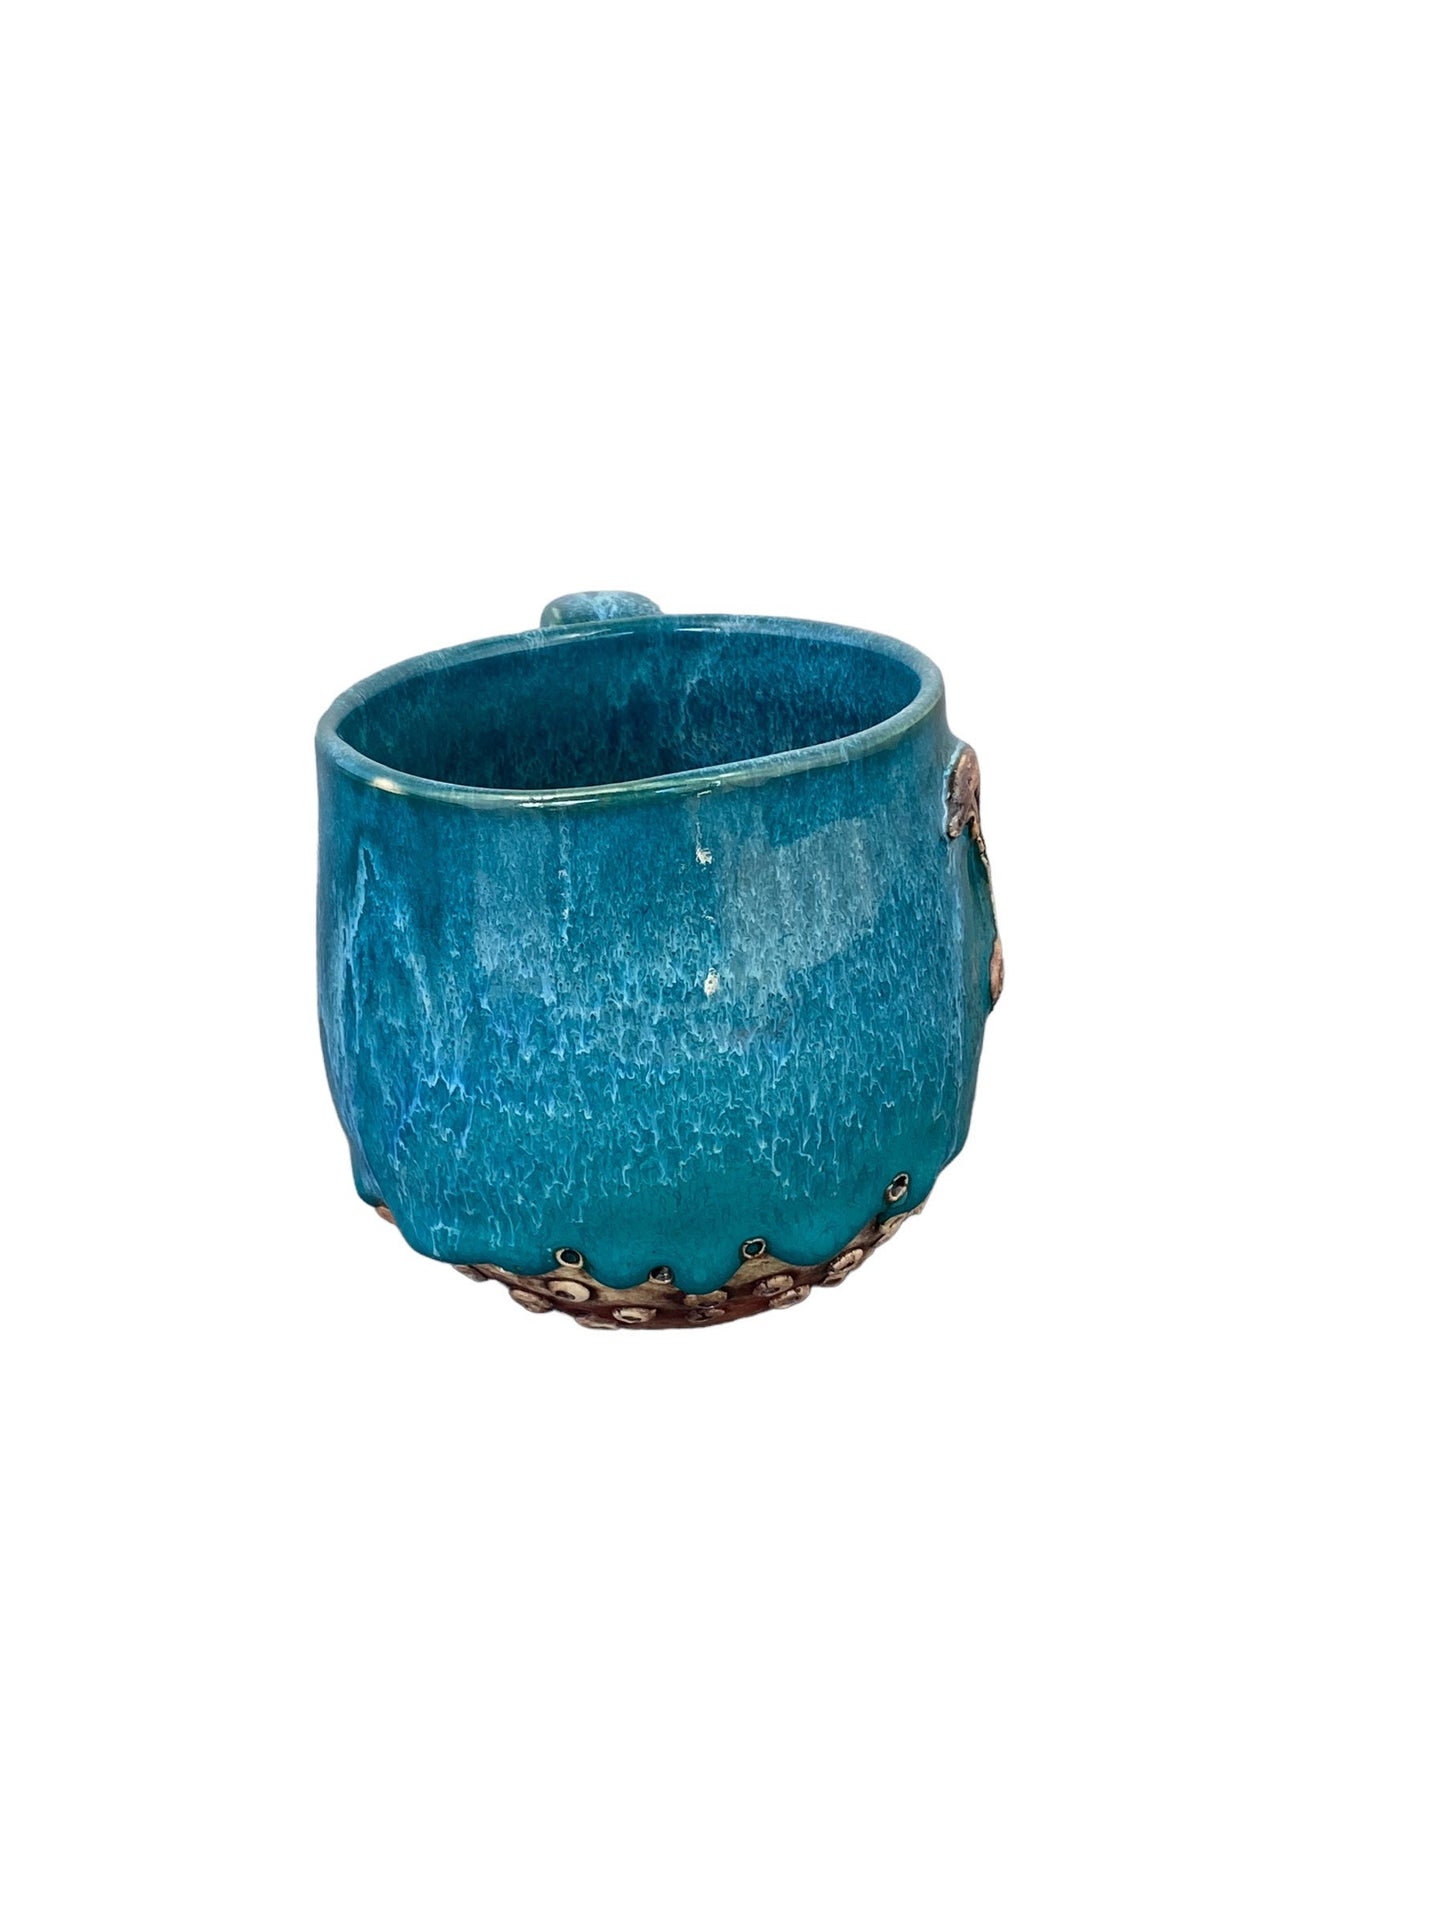 Turquoise Coffee Mug Embellished with a Dolphin - Tea Mug  Hot Chocolate Mug Pottery Mug Earthy Mug Ceramic White Pottery Mug Unique Mug